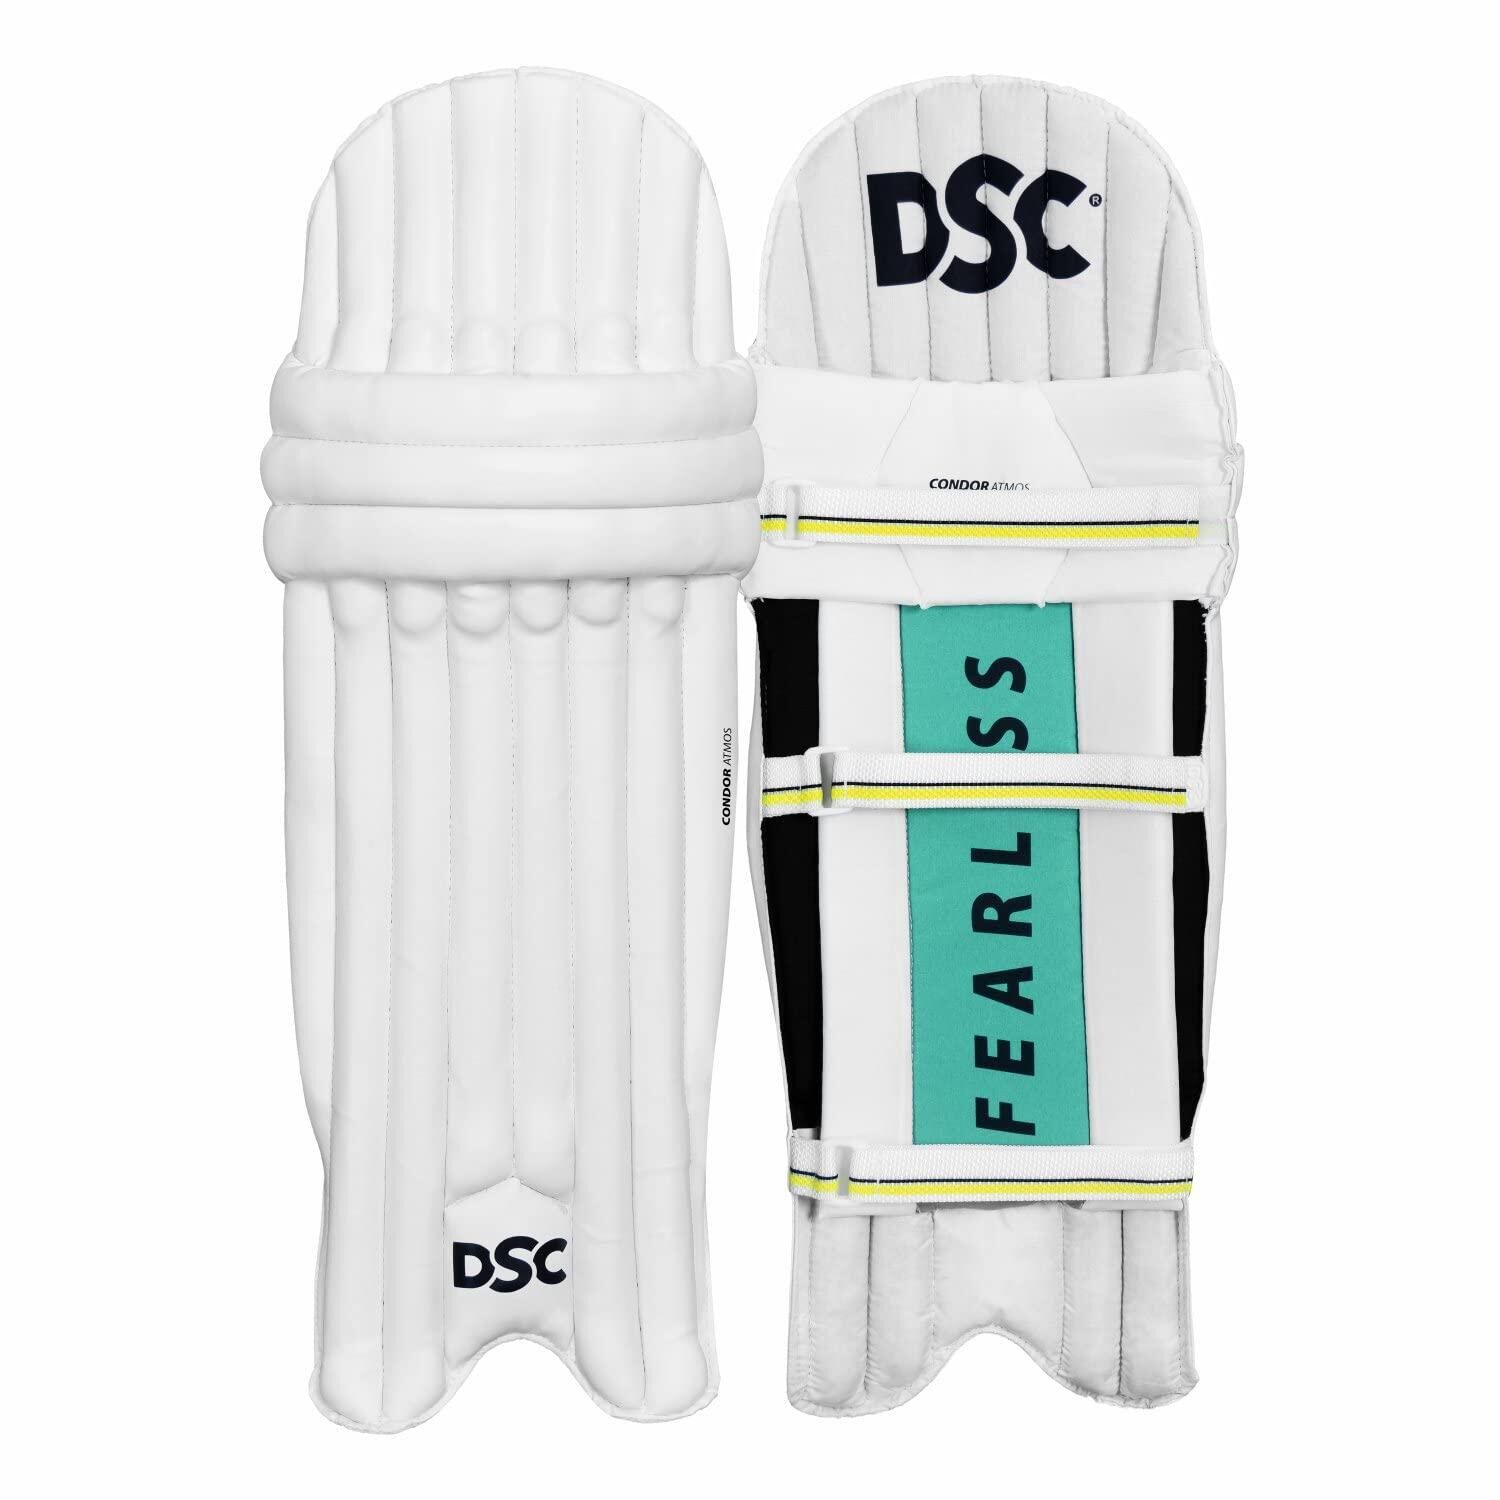 DSC DSC Condor Atmos Cricket Batting Legguard